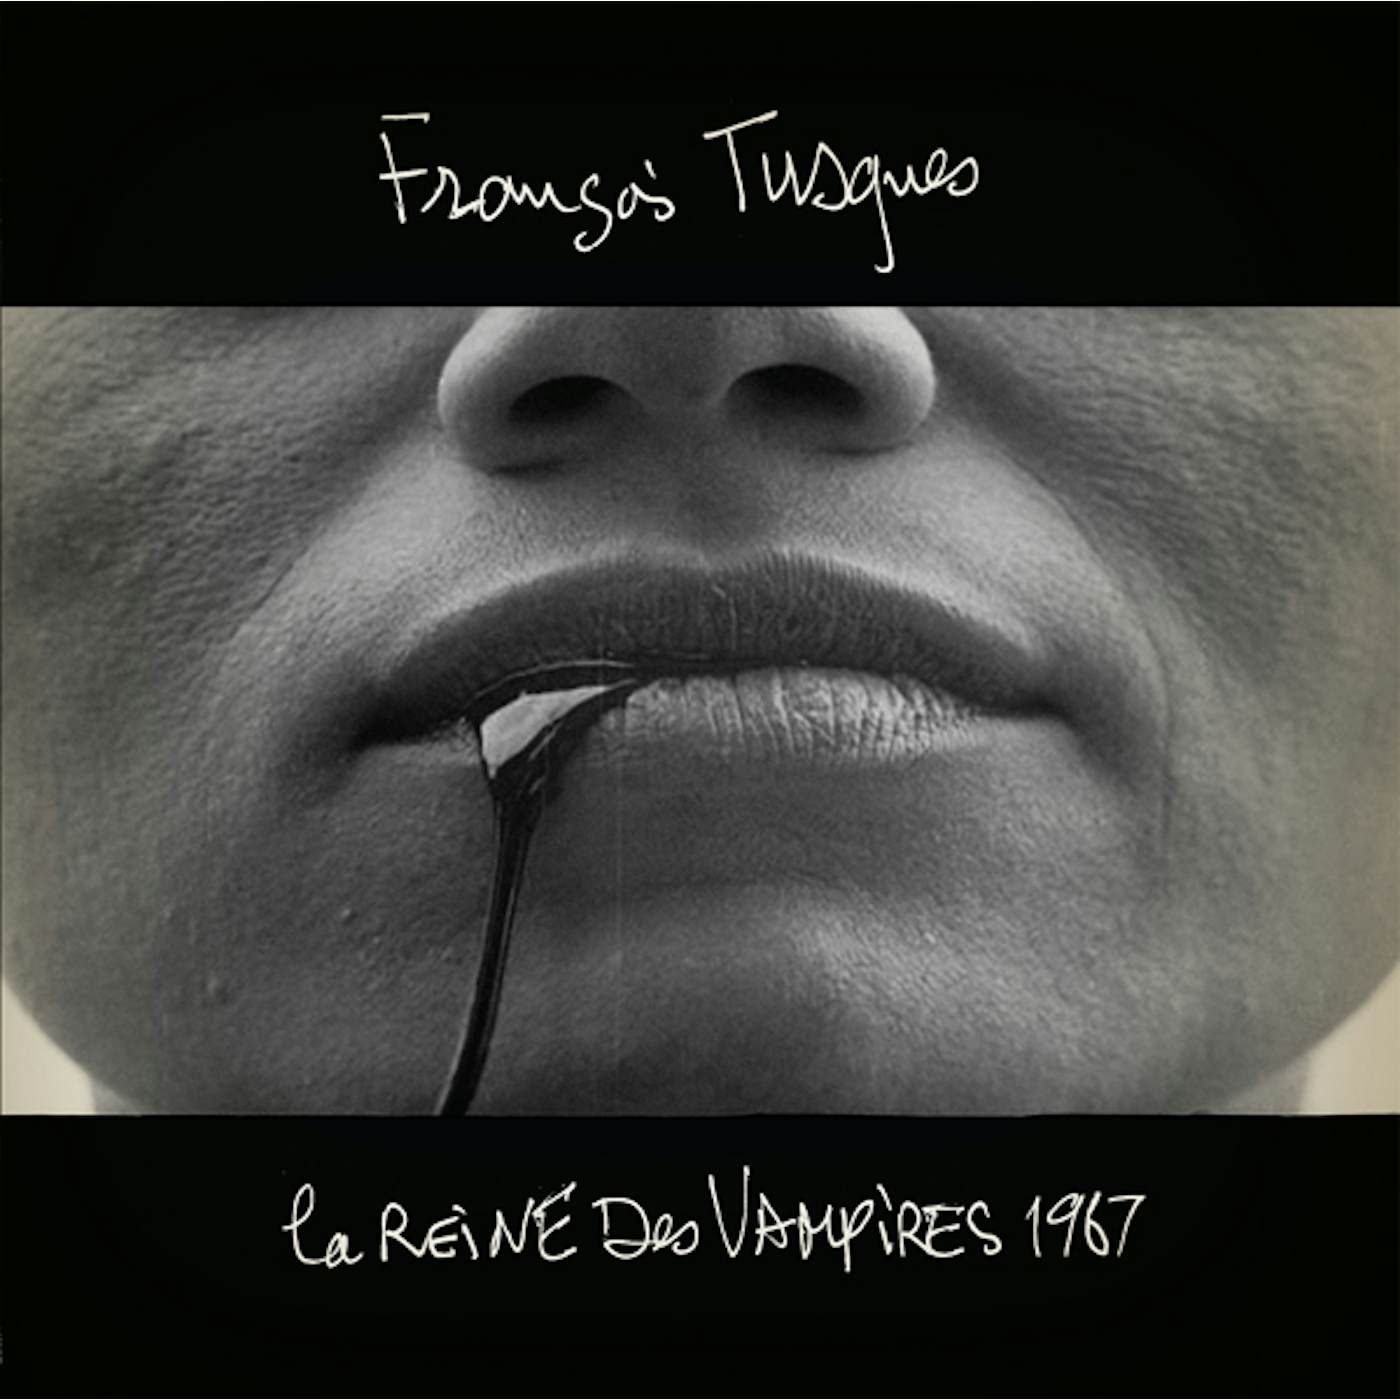 François Tusques LA REINE DES VAMPIRES 1967 Vinyl Record - UK Release